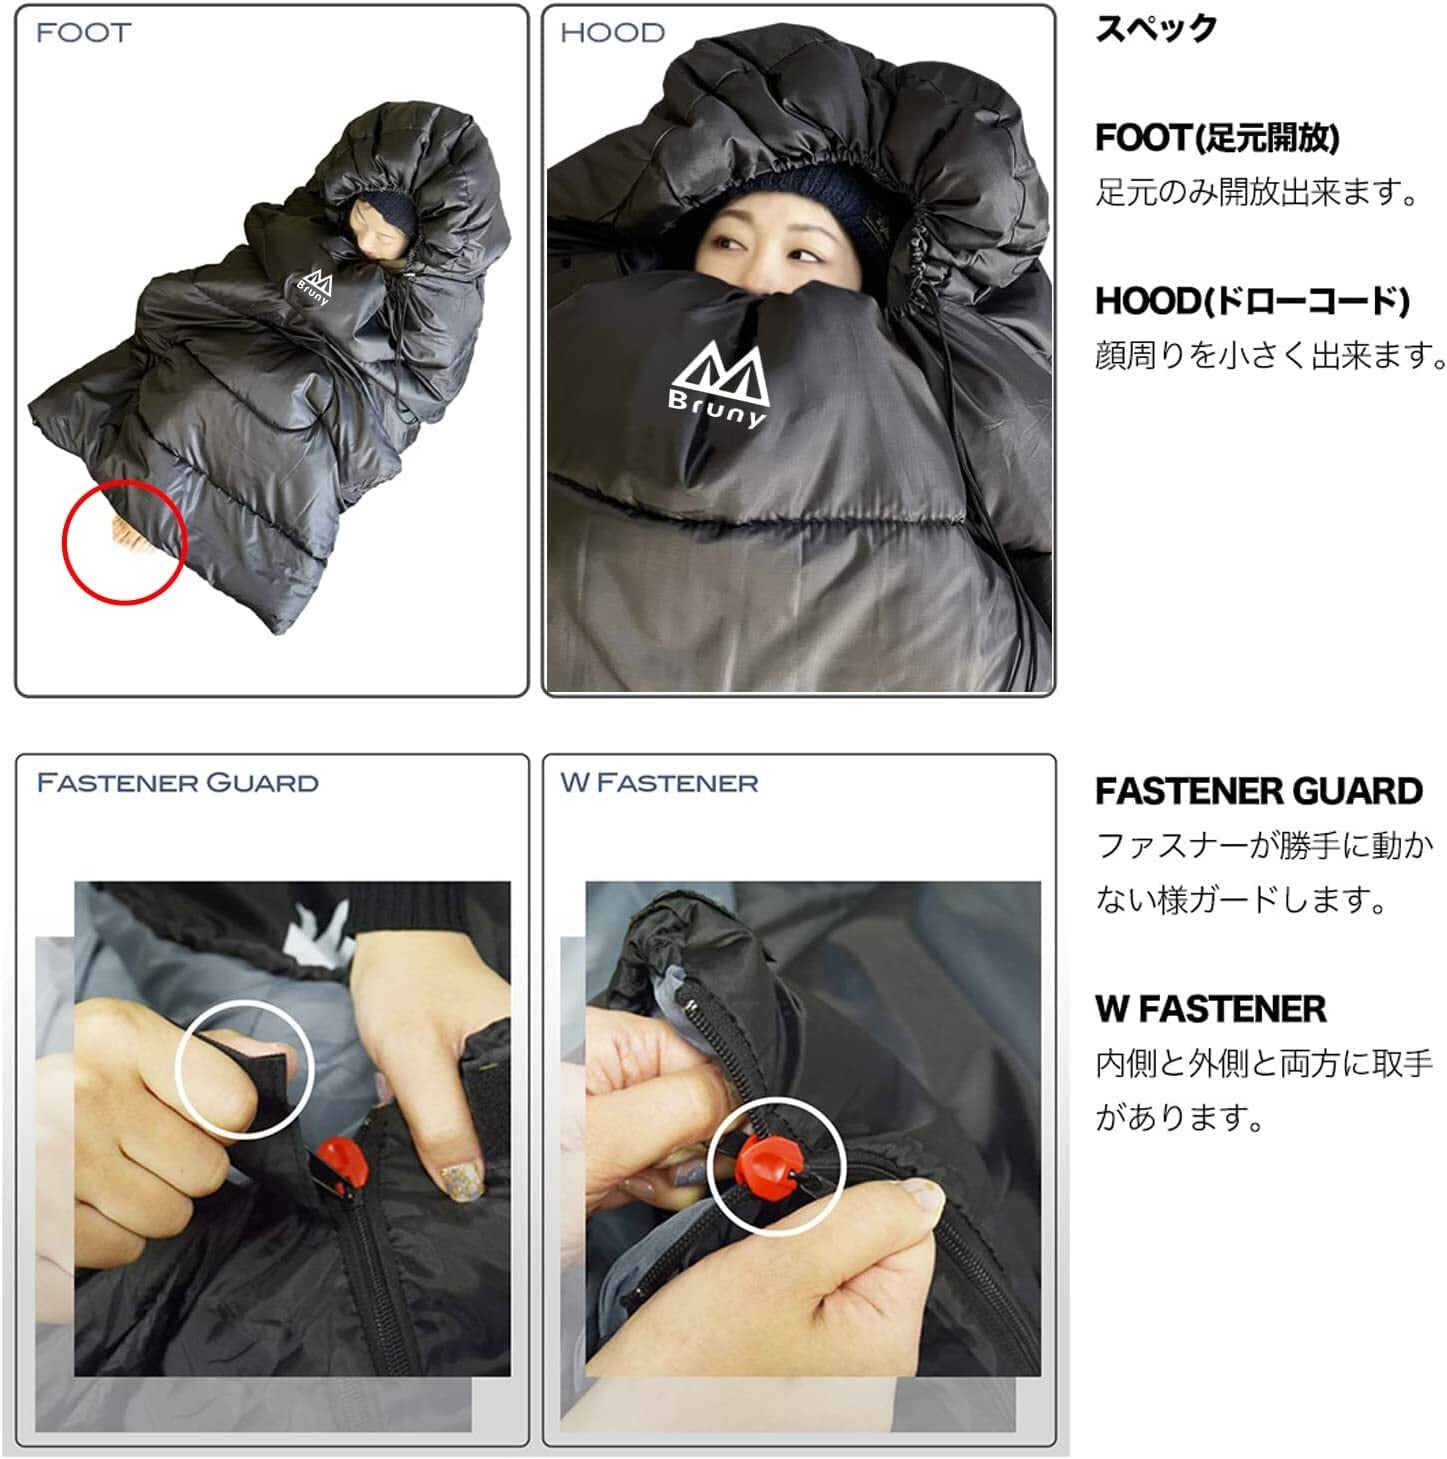 Bruny outdoor] 最低温度 -30℃ 寝袋 シュラフ 冬用 ワイド 封筒型 210T